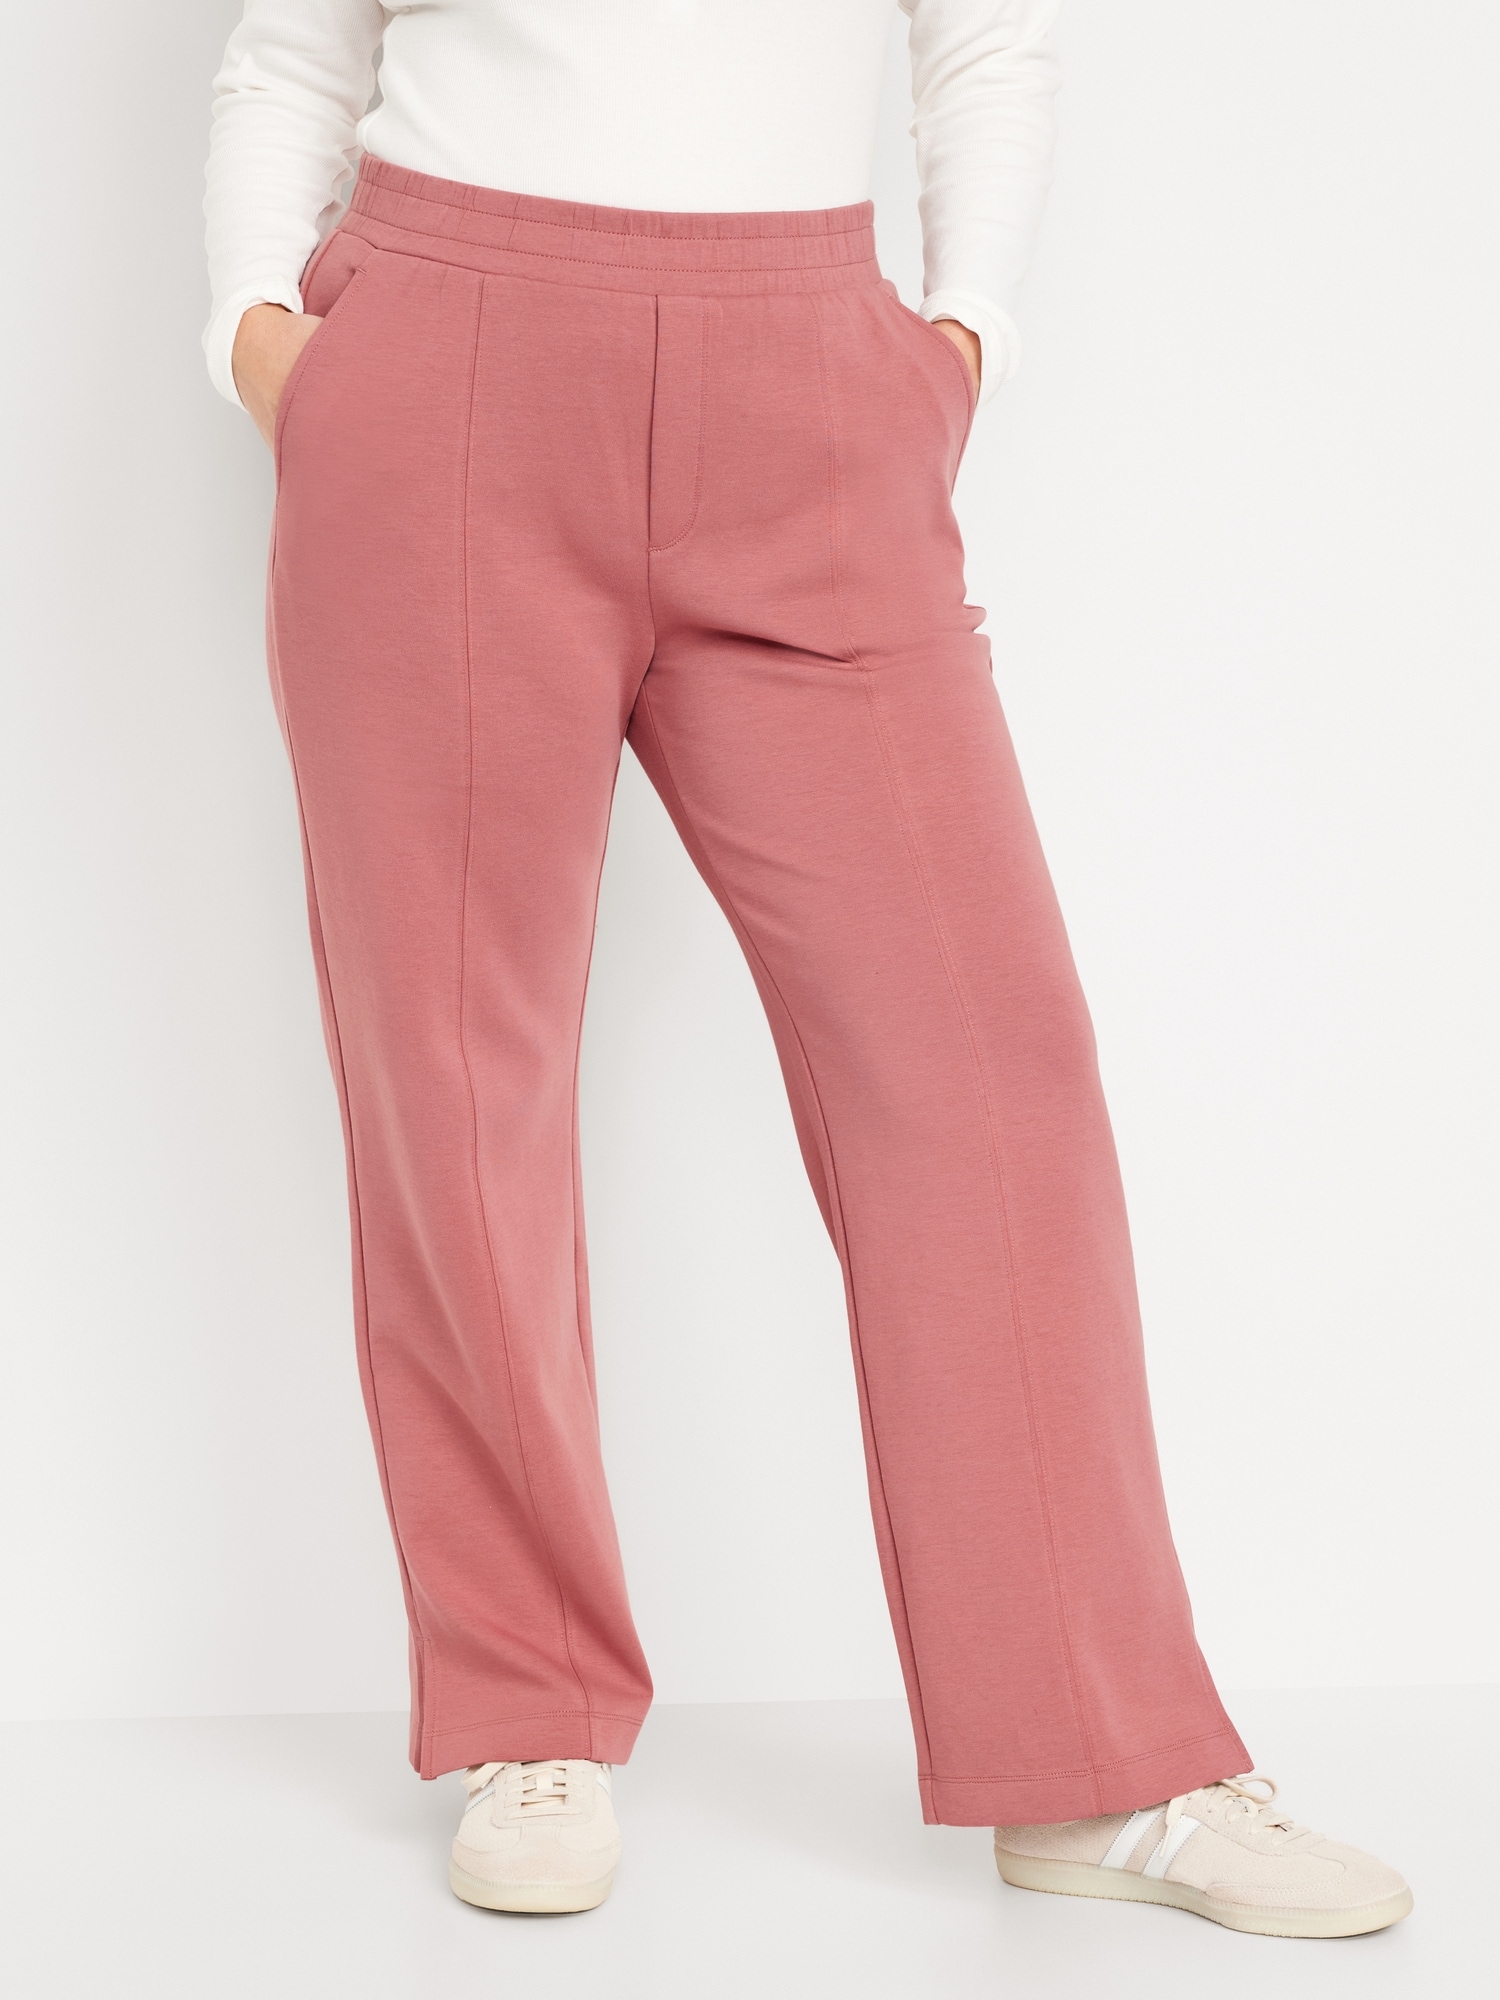 Women's Pink Long Sleeve Blouse, Hot Pink Wide Leg Pants, Beige Leather  Pumps, Tan Straw Clutch | Lookastic